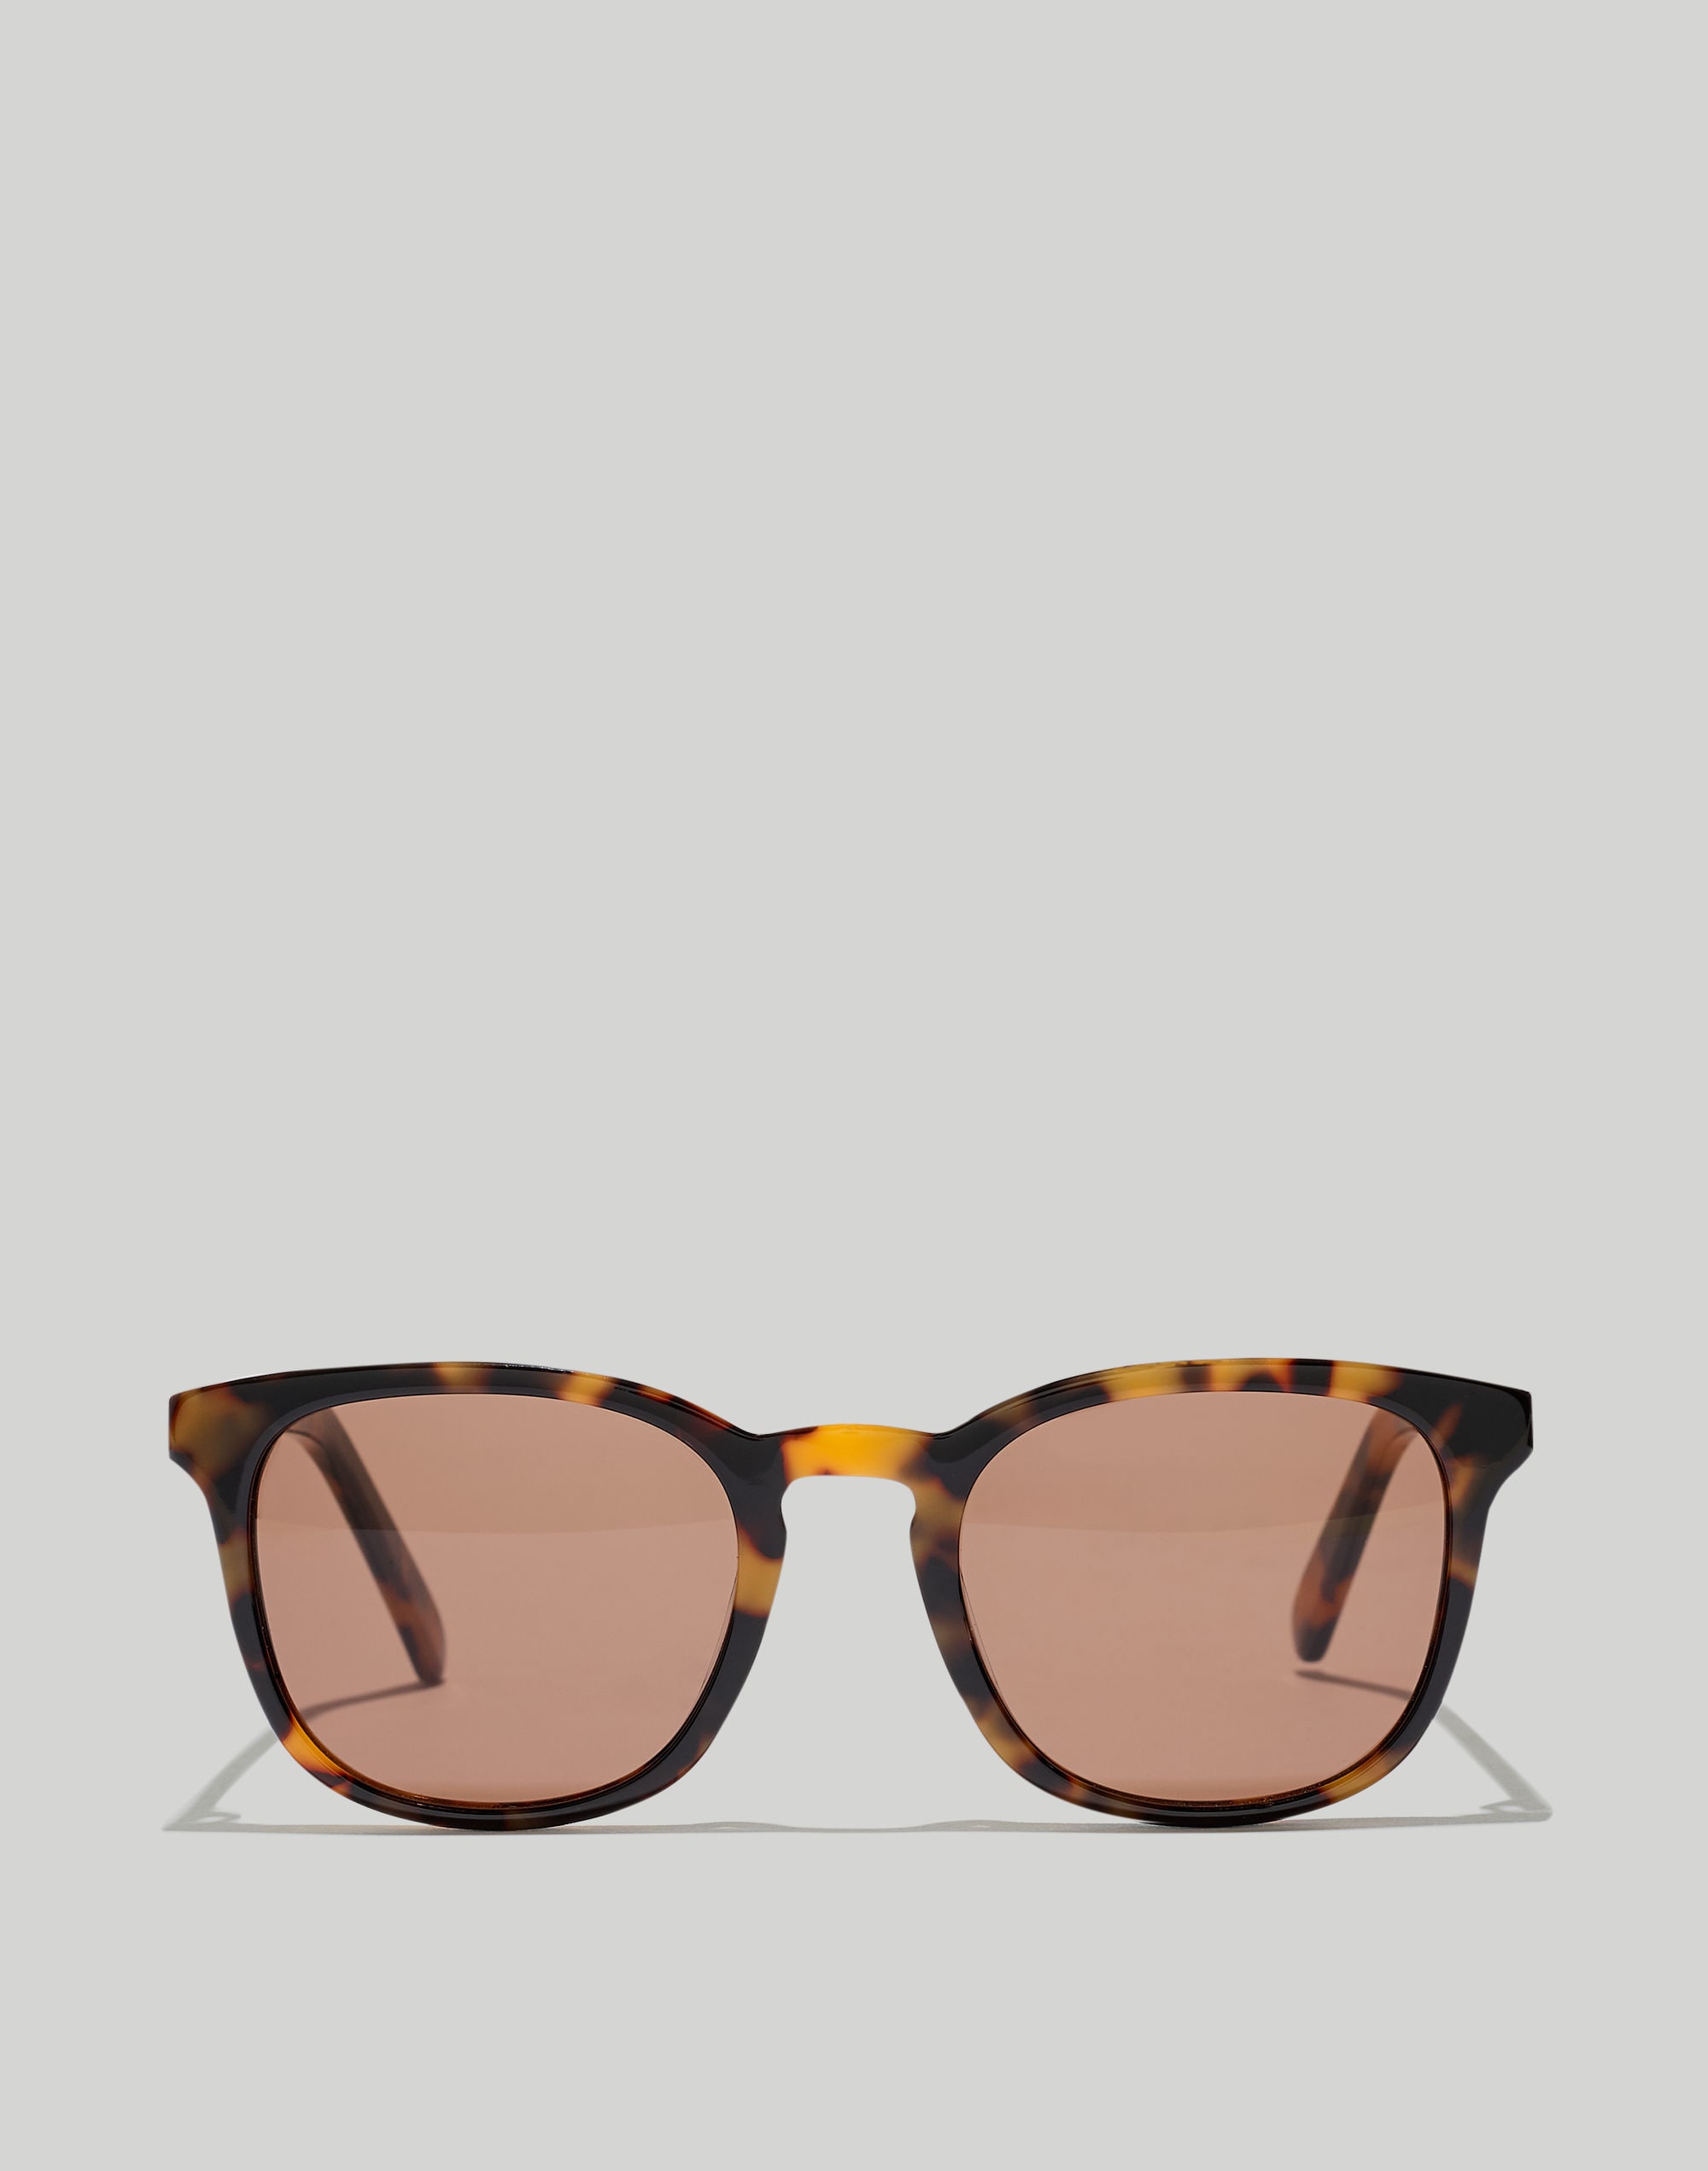 Ashcroft Sunglasses